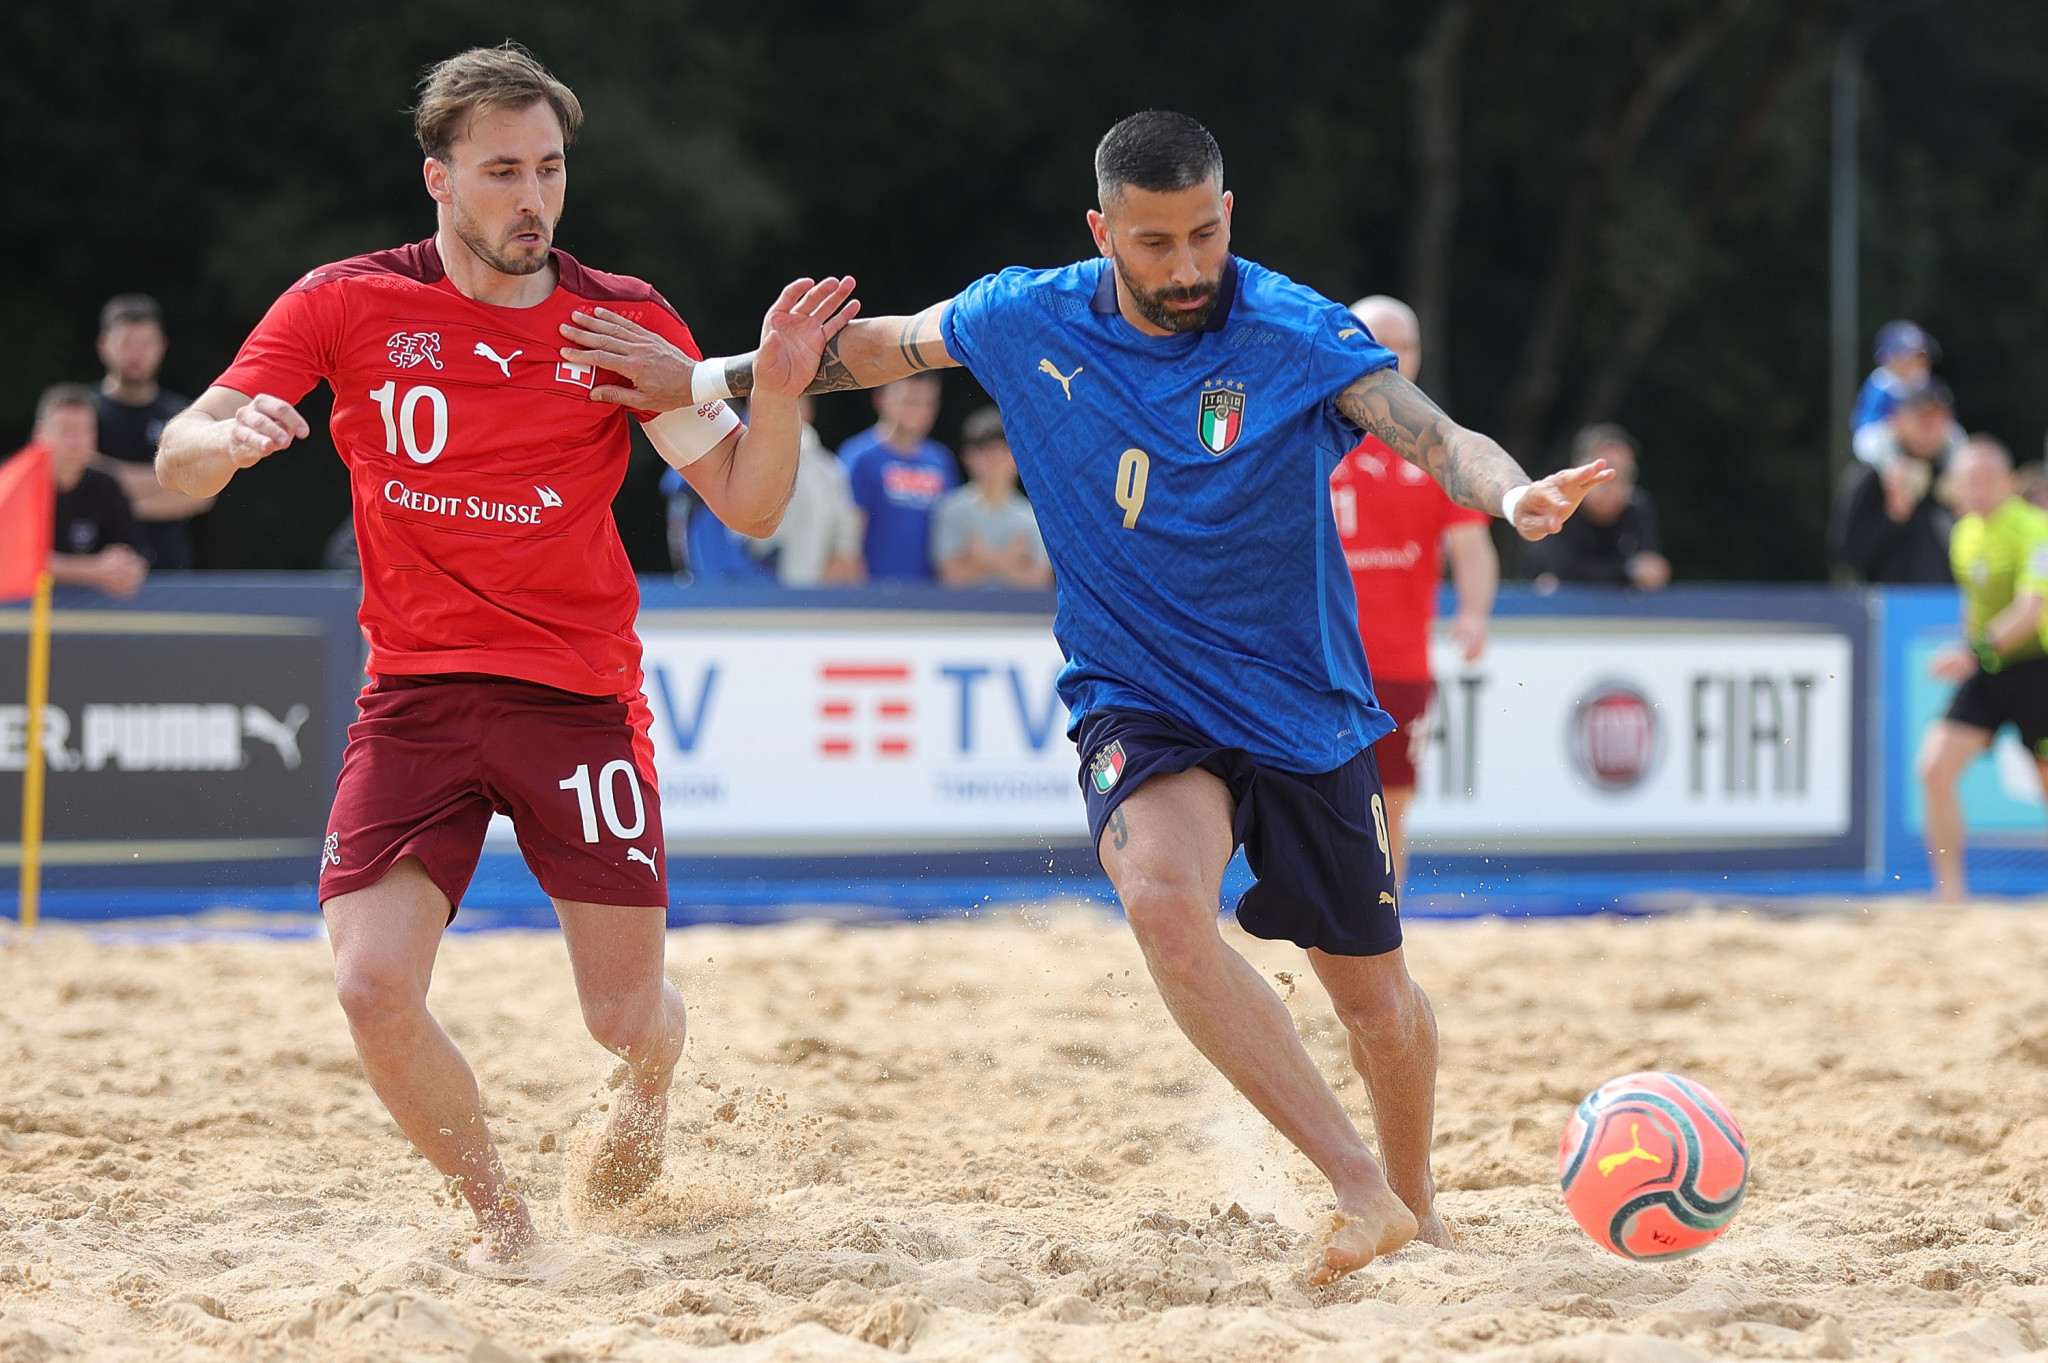 Beach soccer field confirmed for 2023 European Games